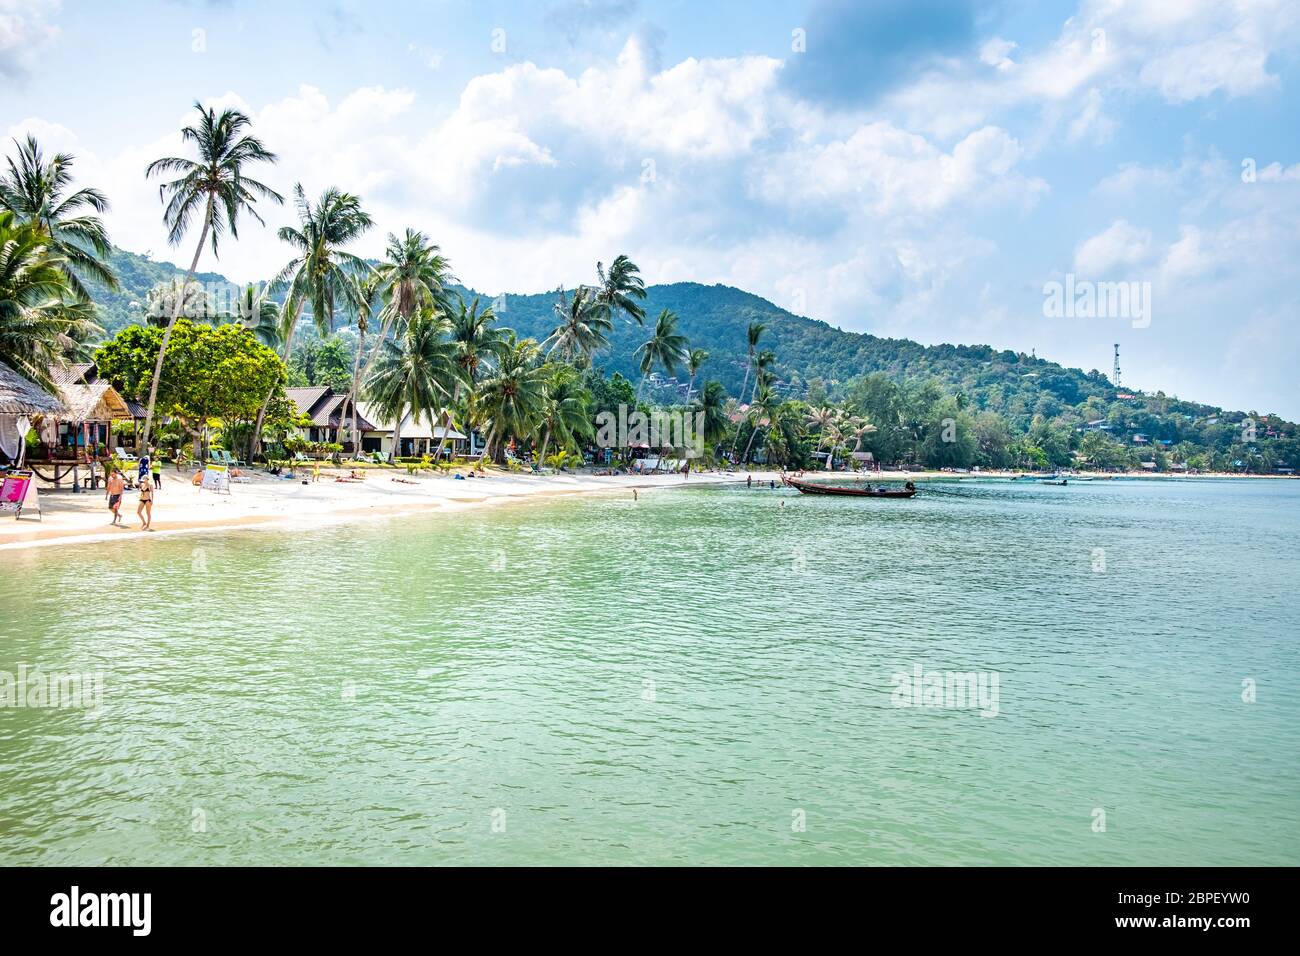 Koh Phangan, Thailand, February 2020: People swim and sunbathe on Haad yao beach, Koh Phangan. Stock Photo